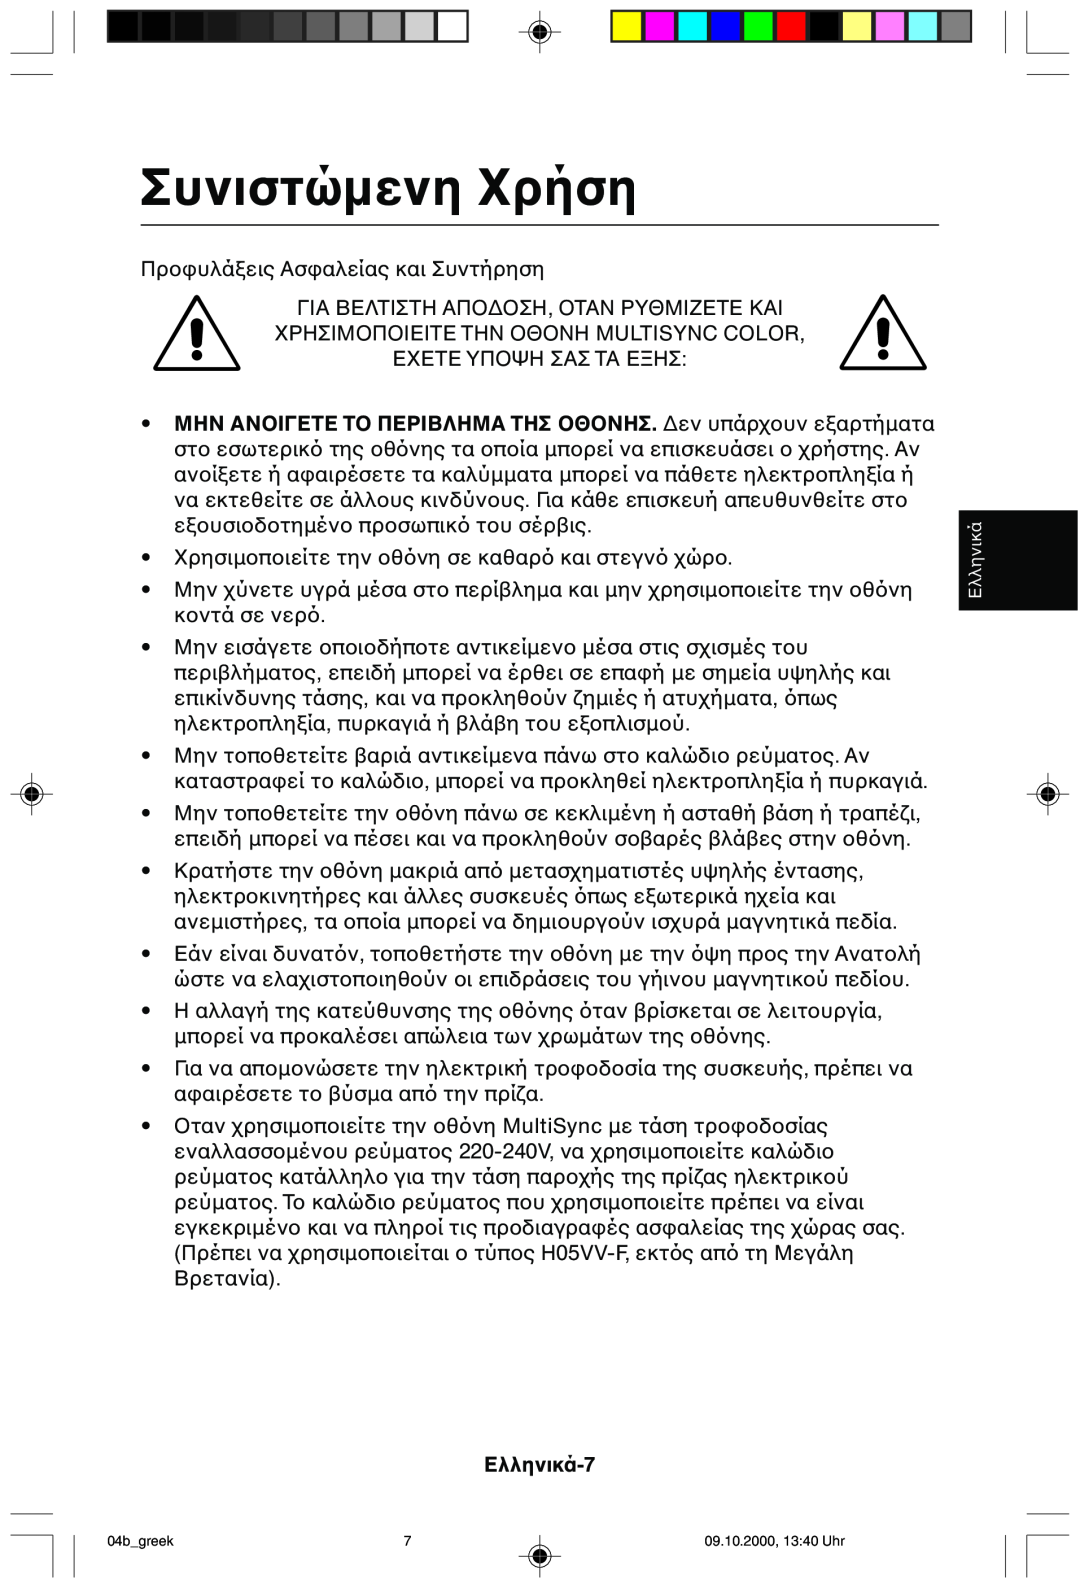 NEC 95F user manual Συνιστώµενη, ΜΗΝ ΑΝΤΤΗΣ∆εν υπάρ, Ελληνικά-7 